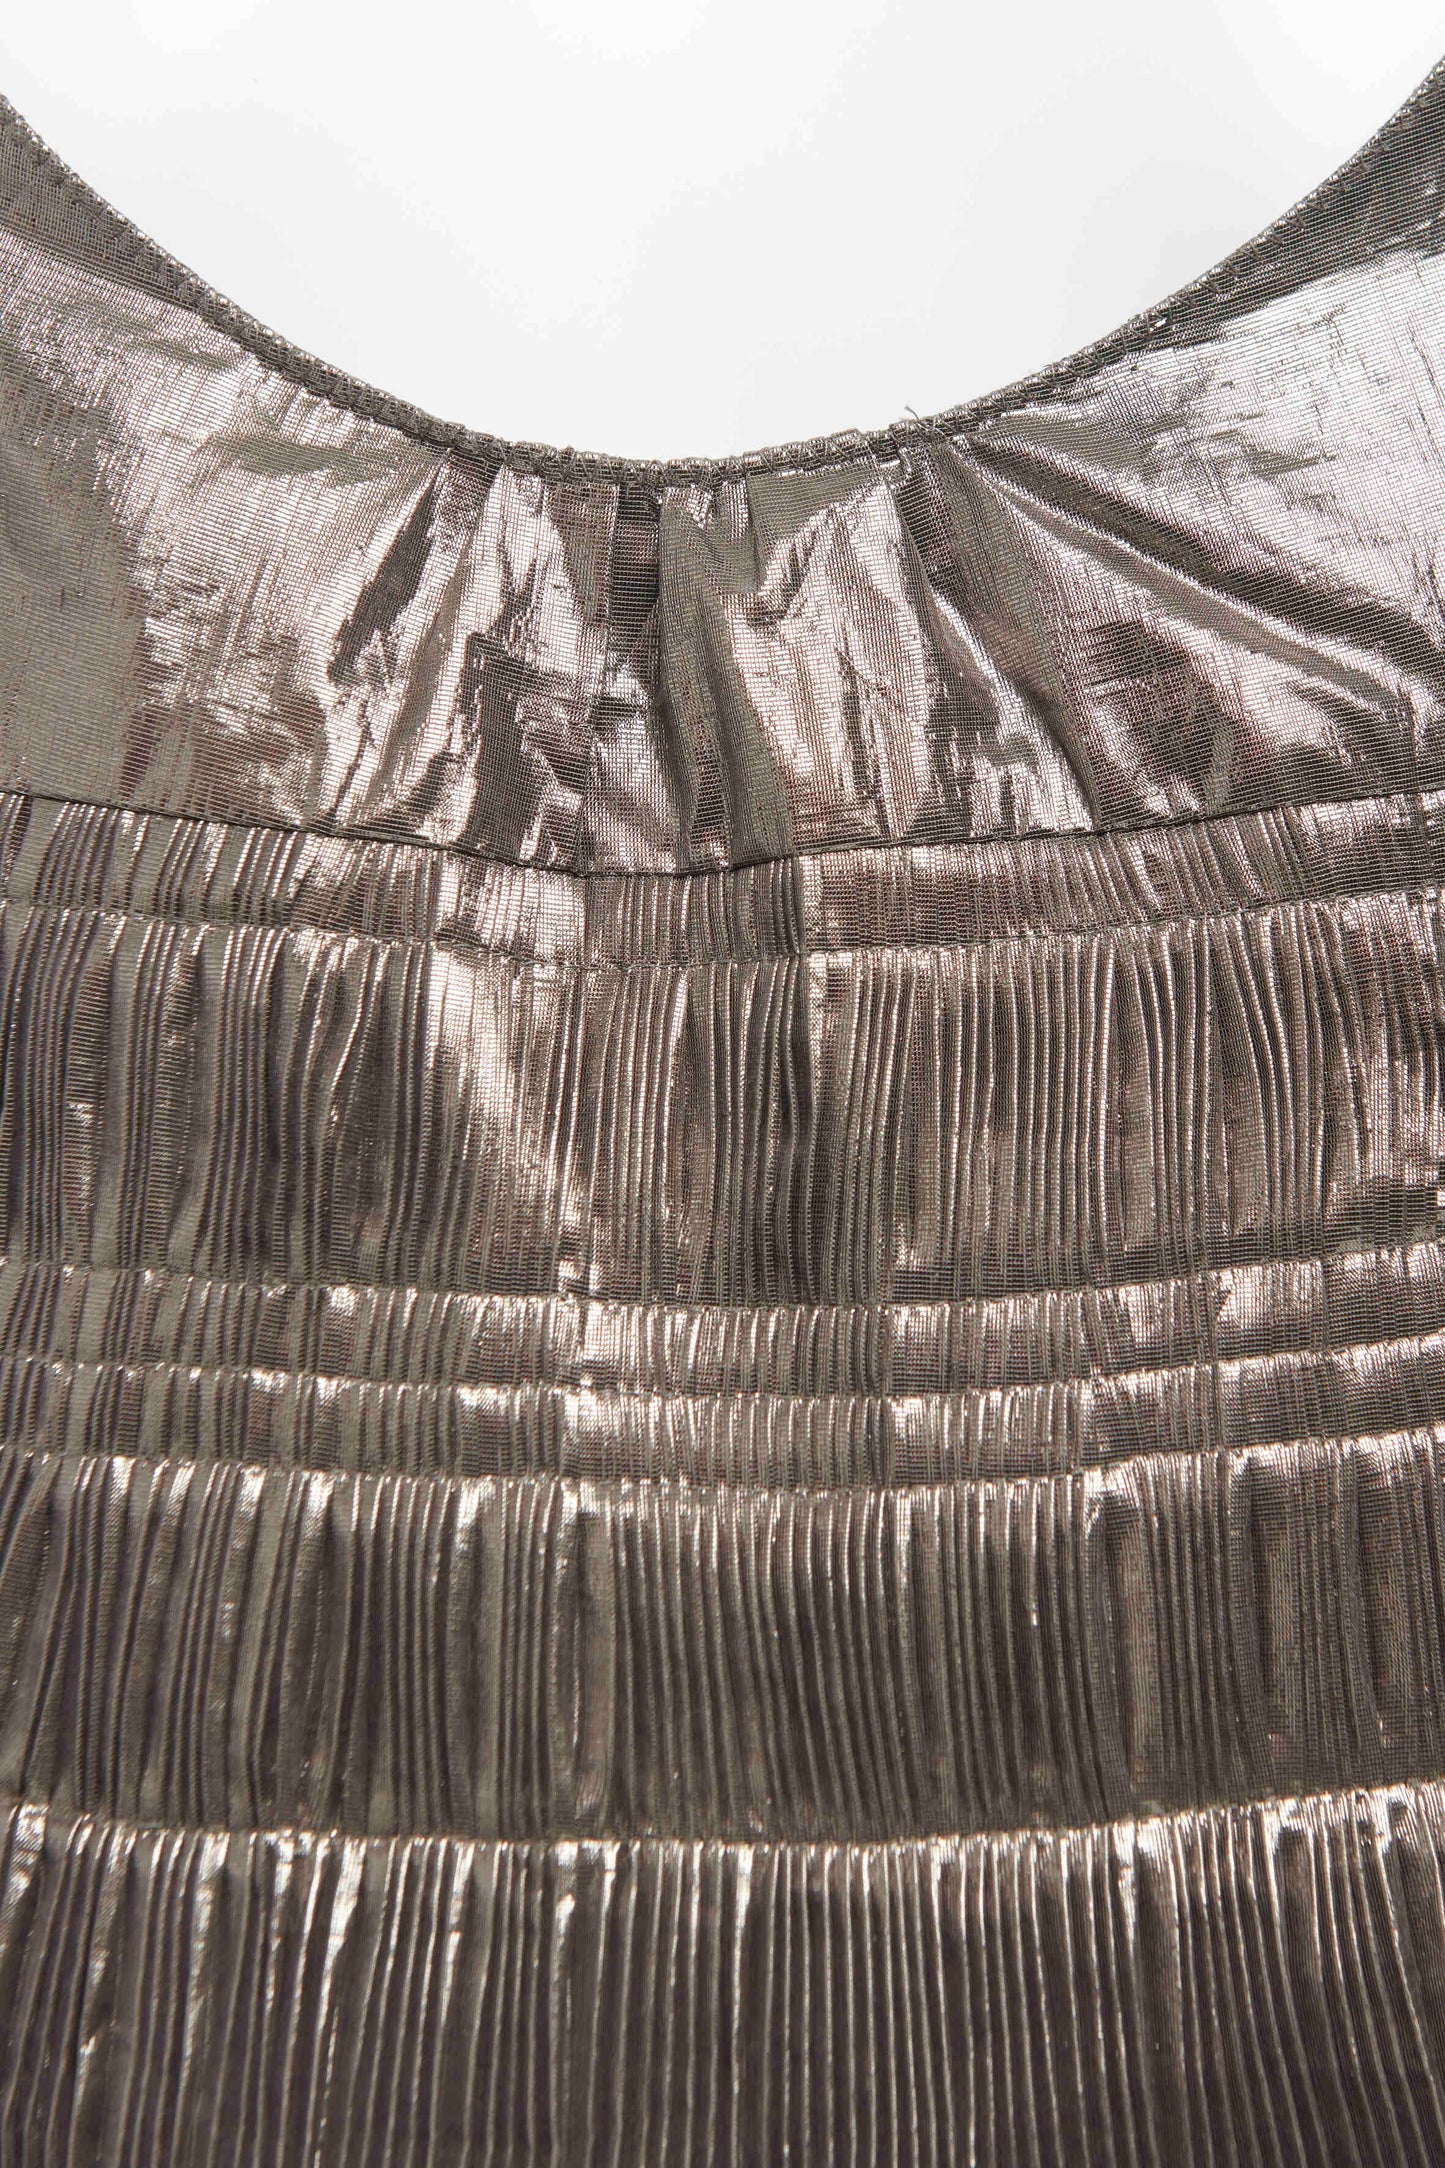 Silver Metallic Pleated Midi Dress